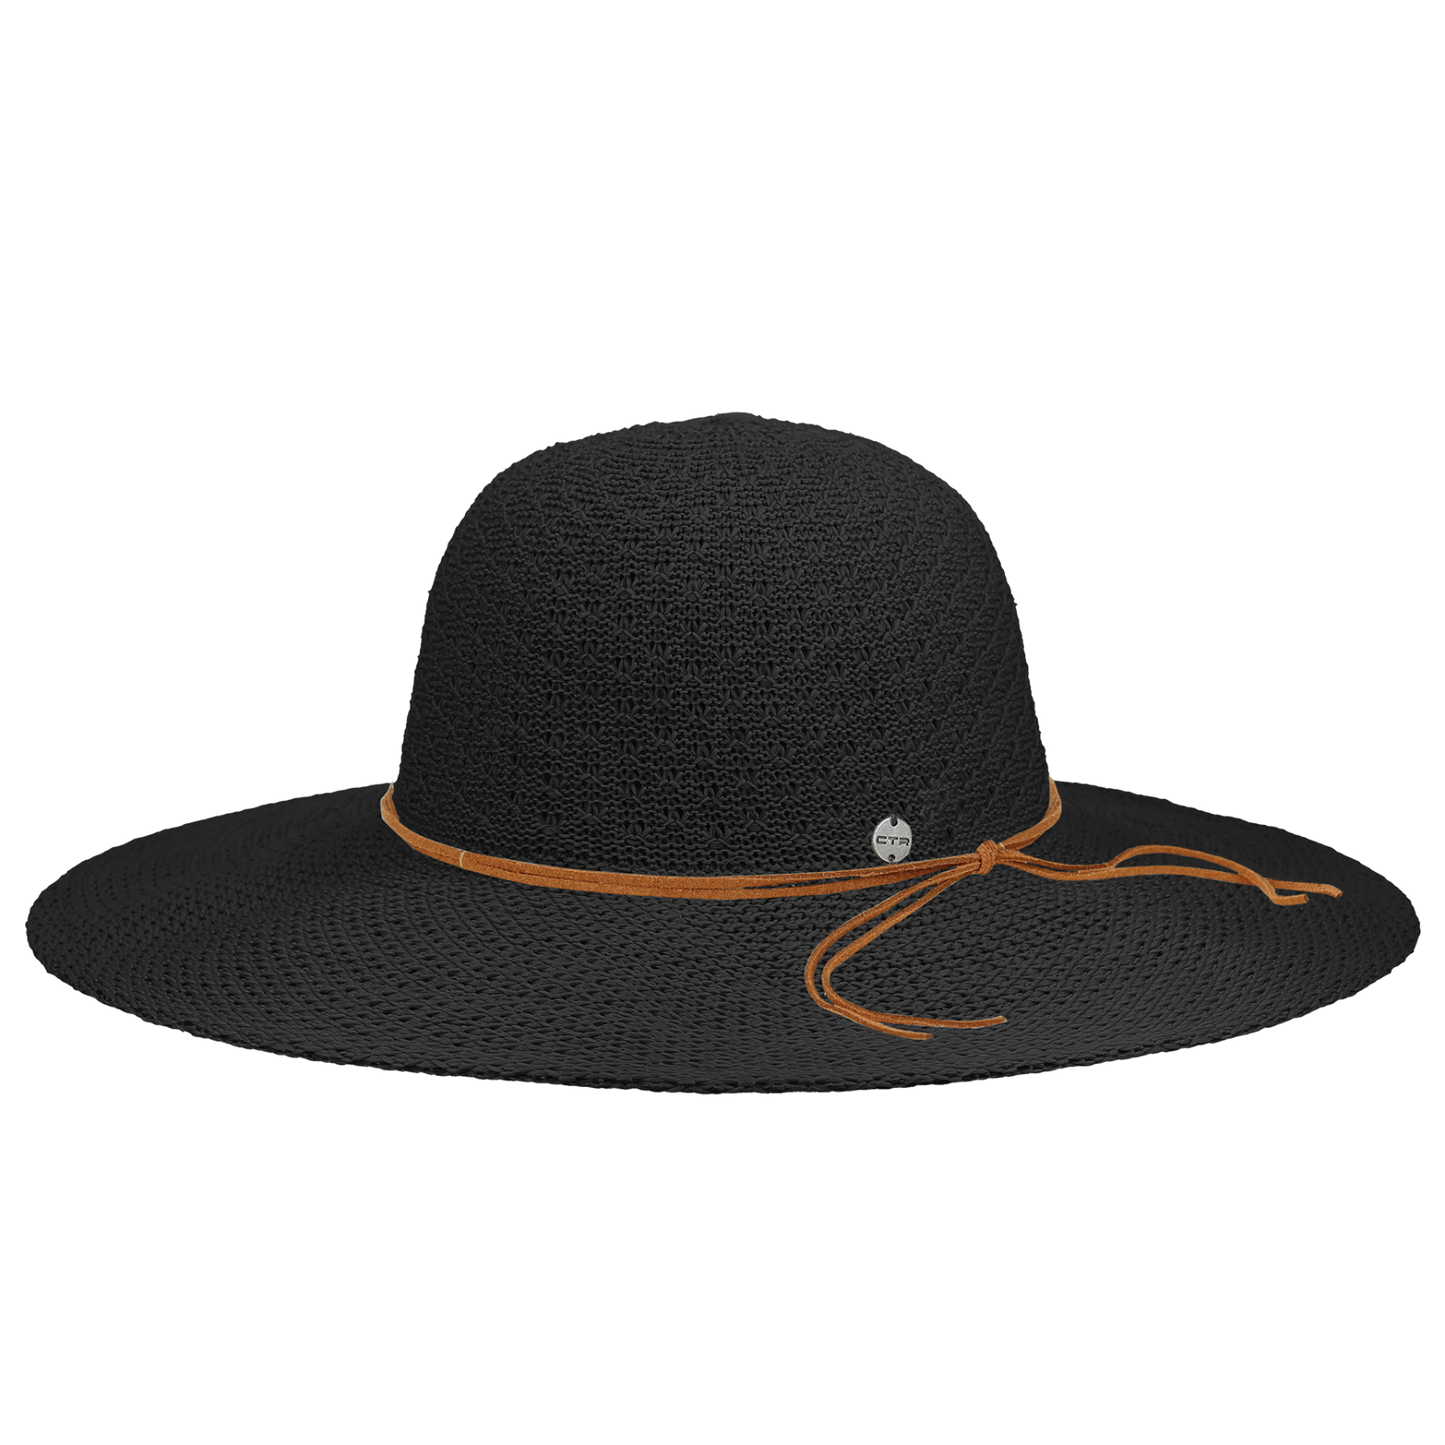 Wanderlust Odyssey Blocked Knit Sun Hat CTR Style:1831-Sun hat-CTR Outdoors